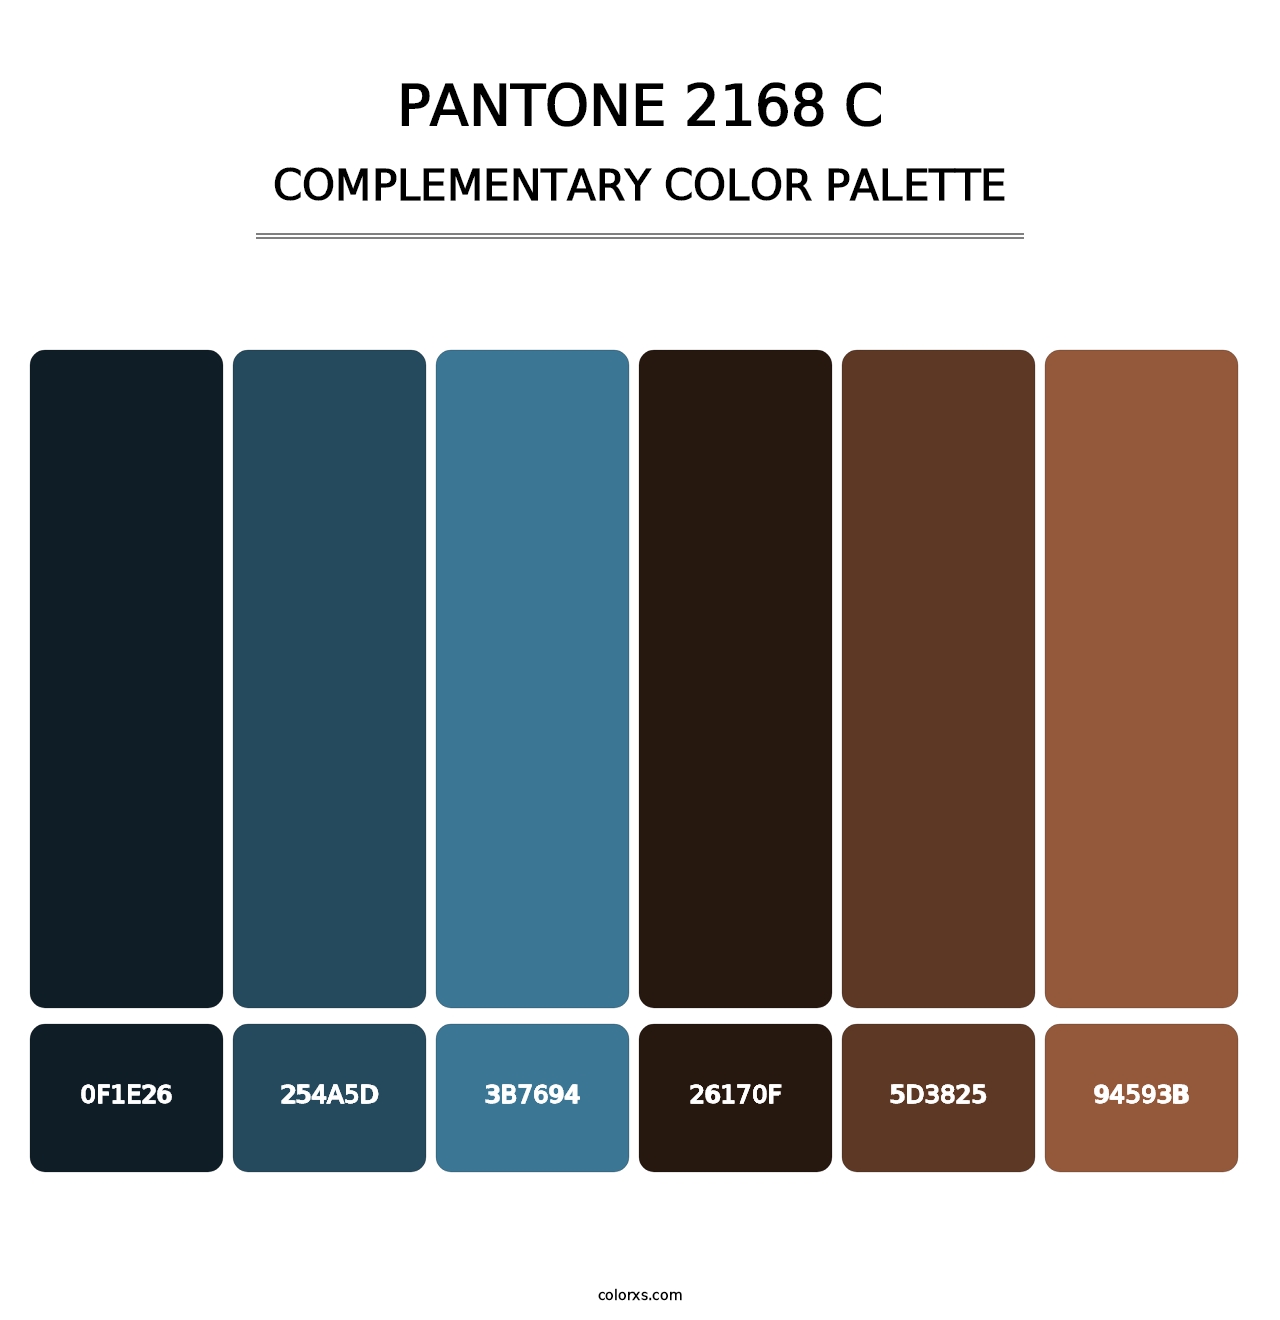 PANTONE 2168 C - Complementary Color Palette